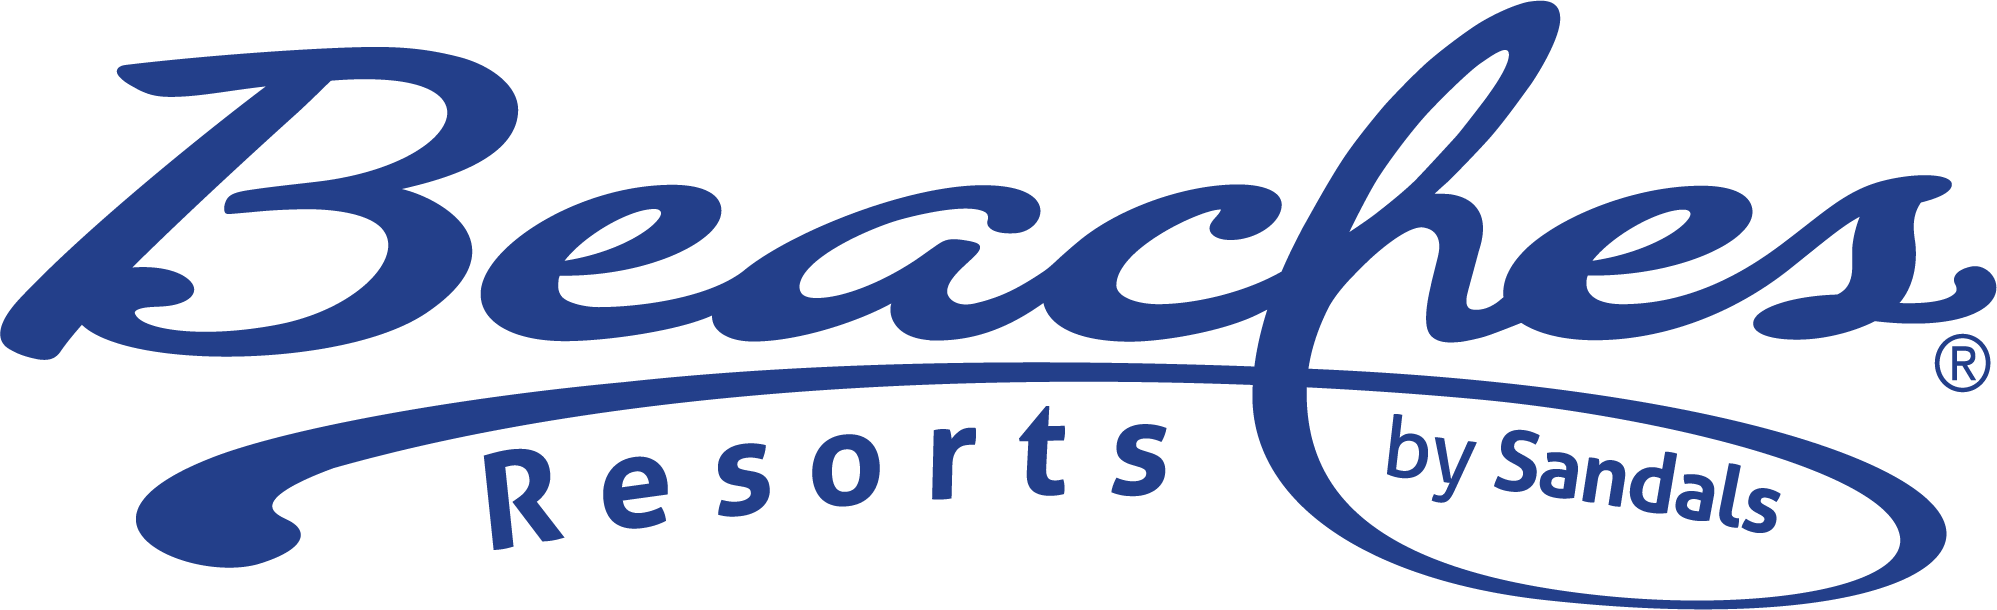 Beaches Resorts by Sandals logo royal